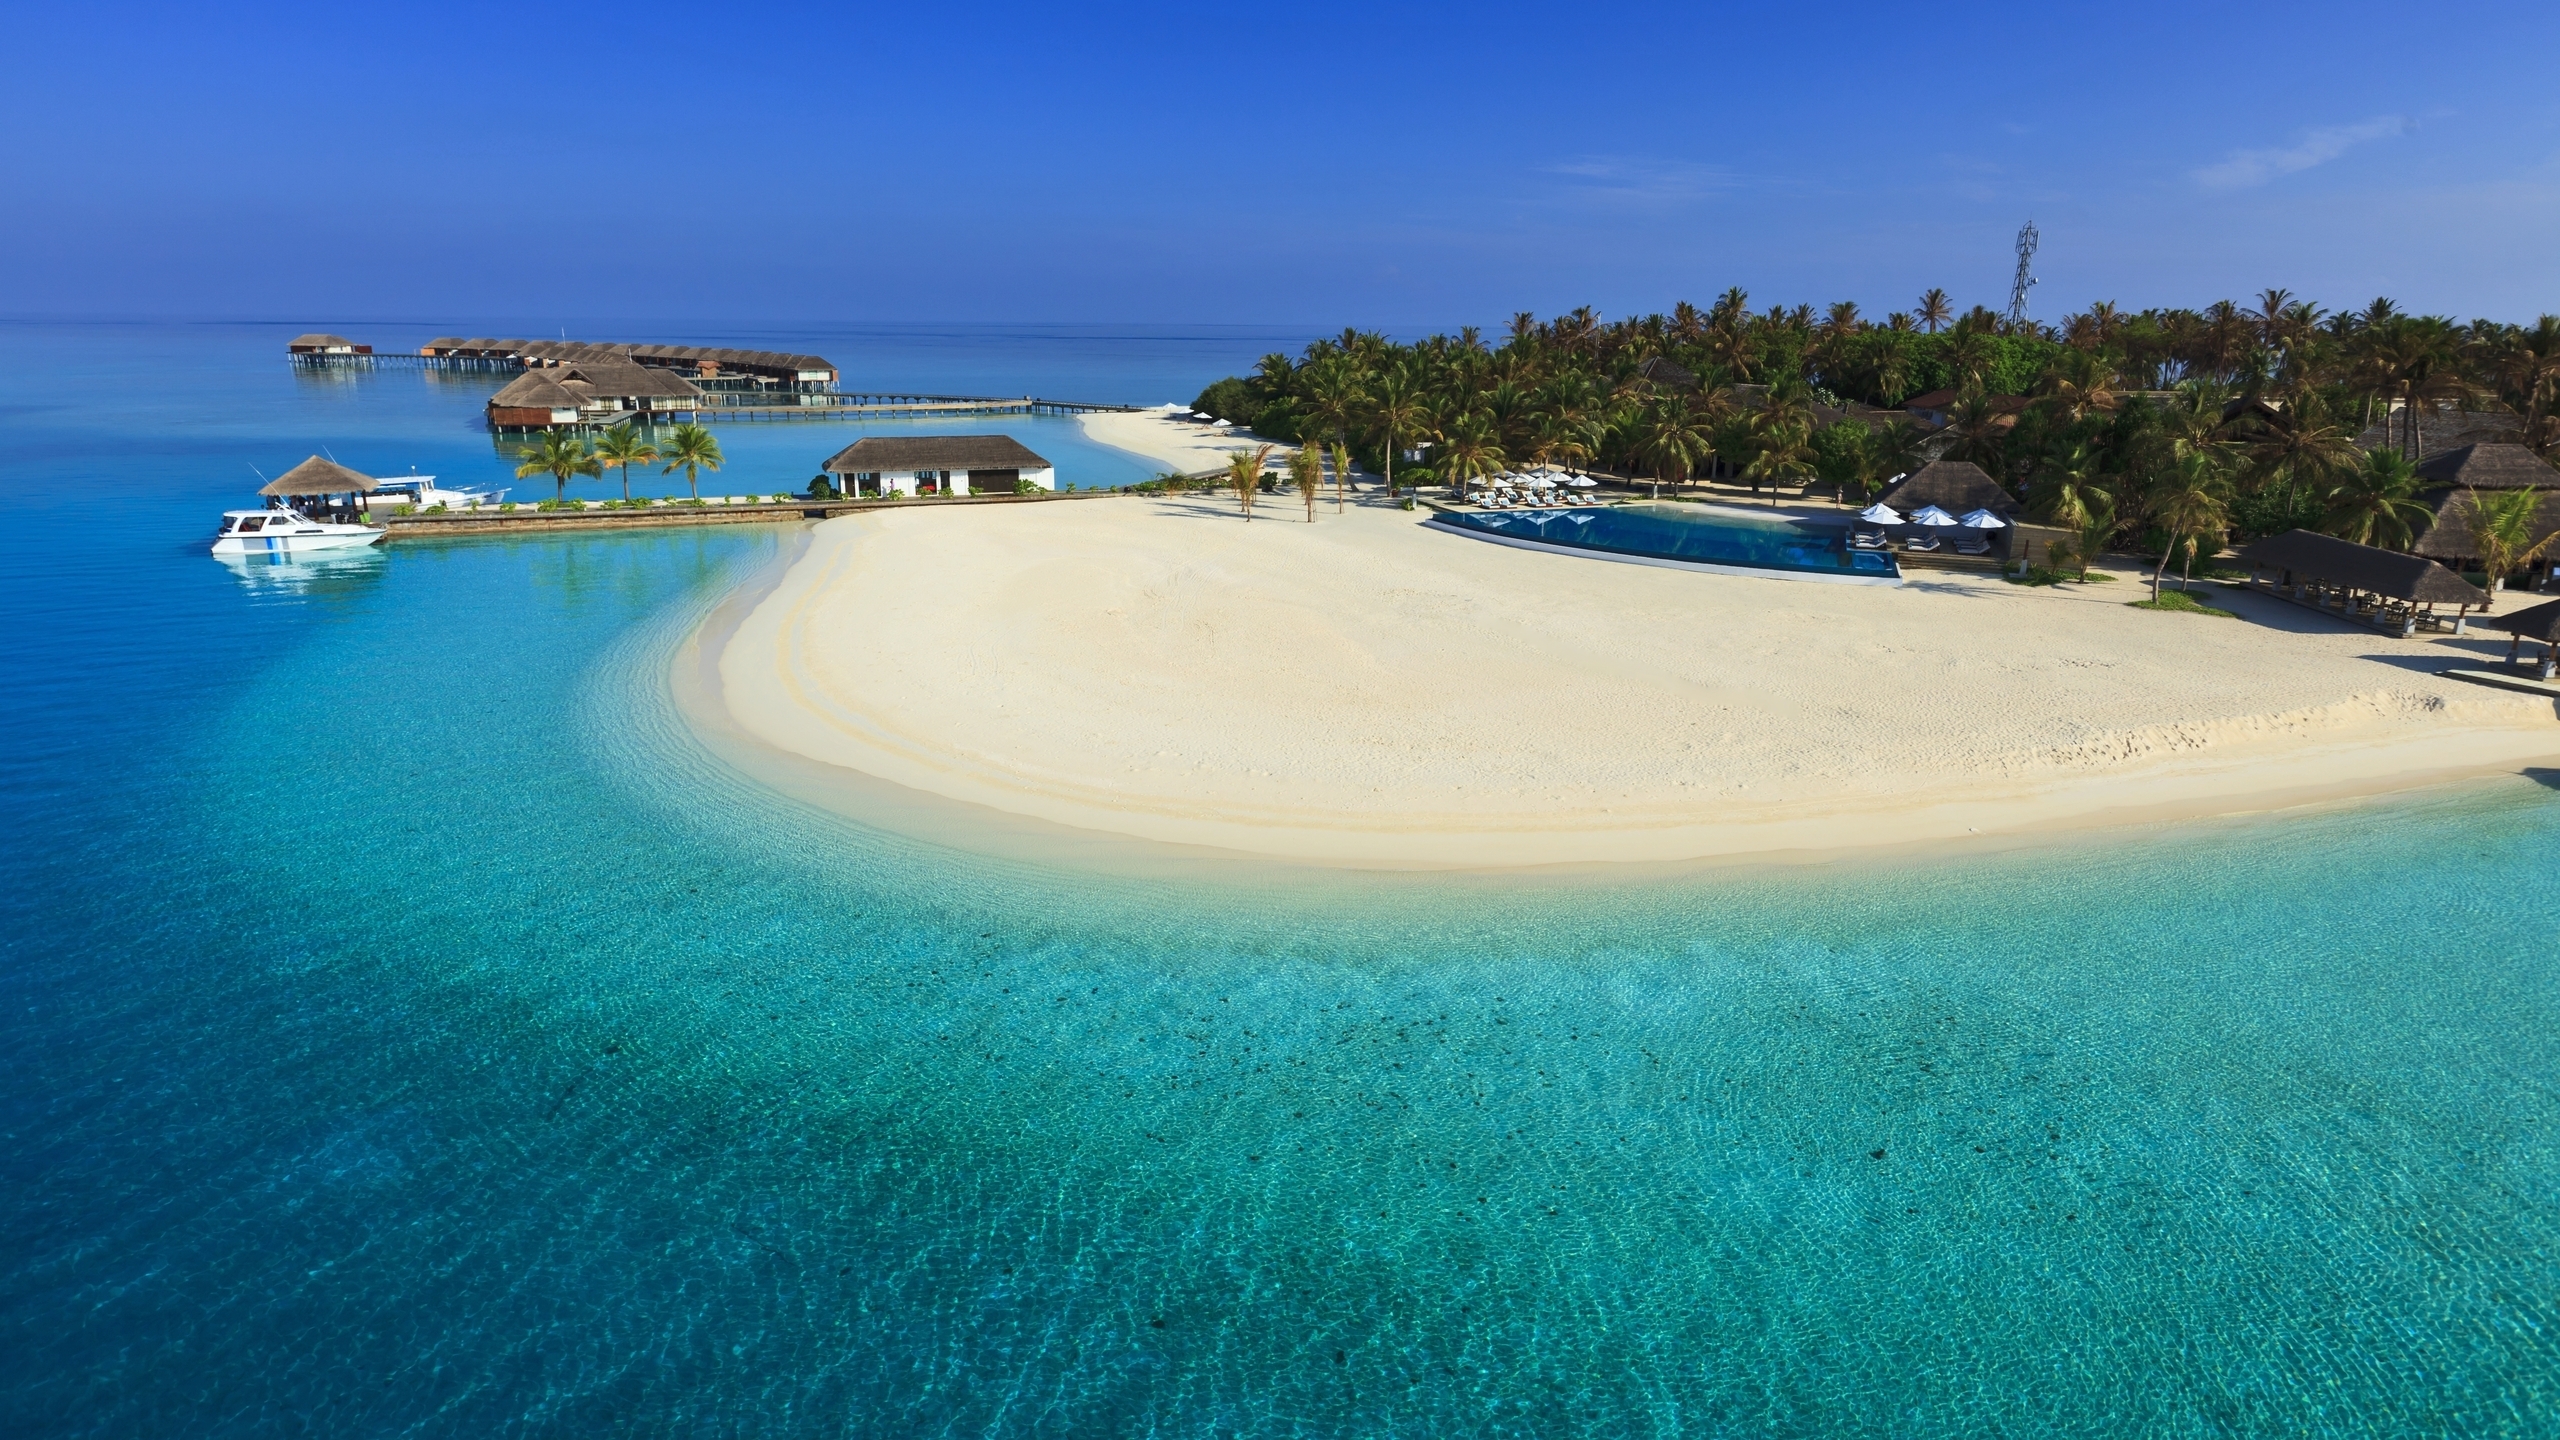 Maldives Luxury Resort for 2560x1440 HDTV resolution